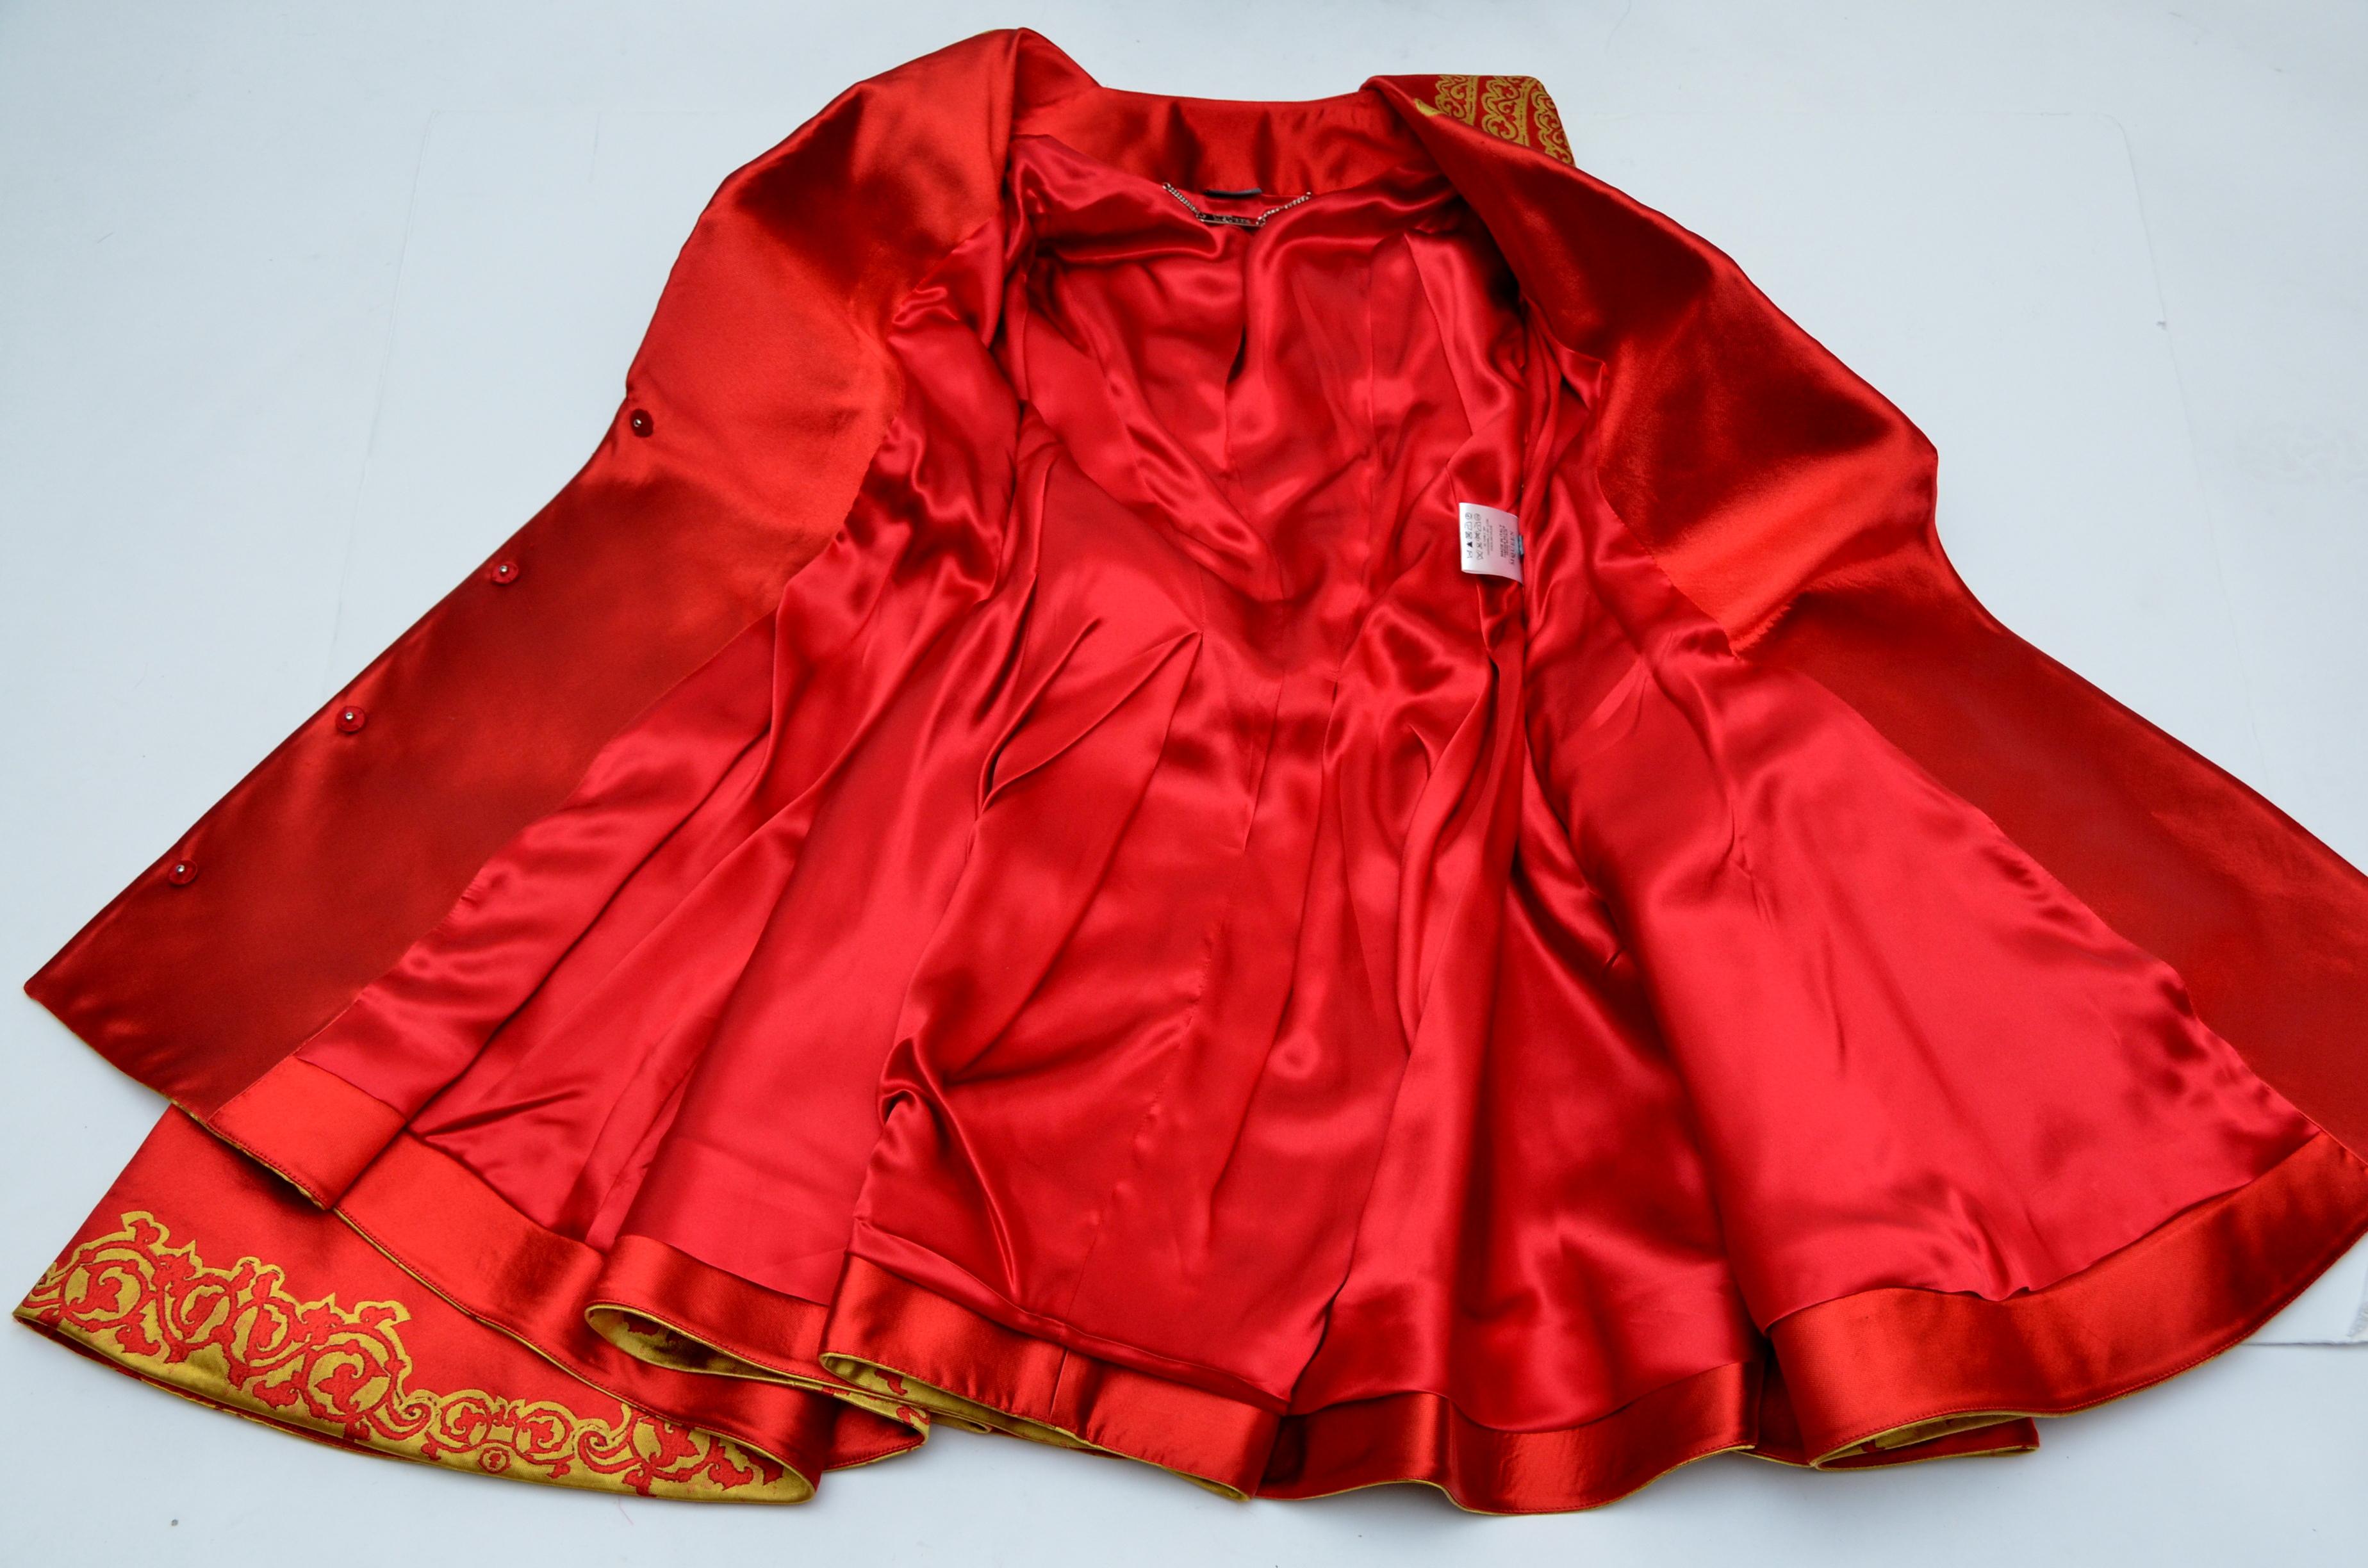 Amazing Rare Alexander McQueen Final Collection Cape Dress 2010  Mint Size 38 2